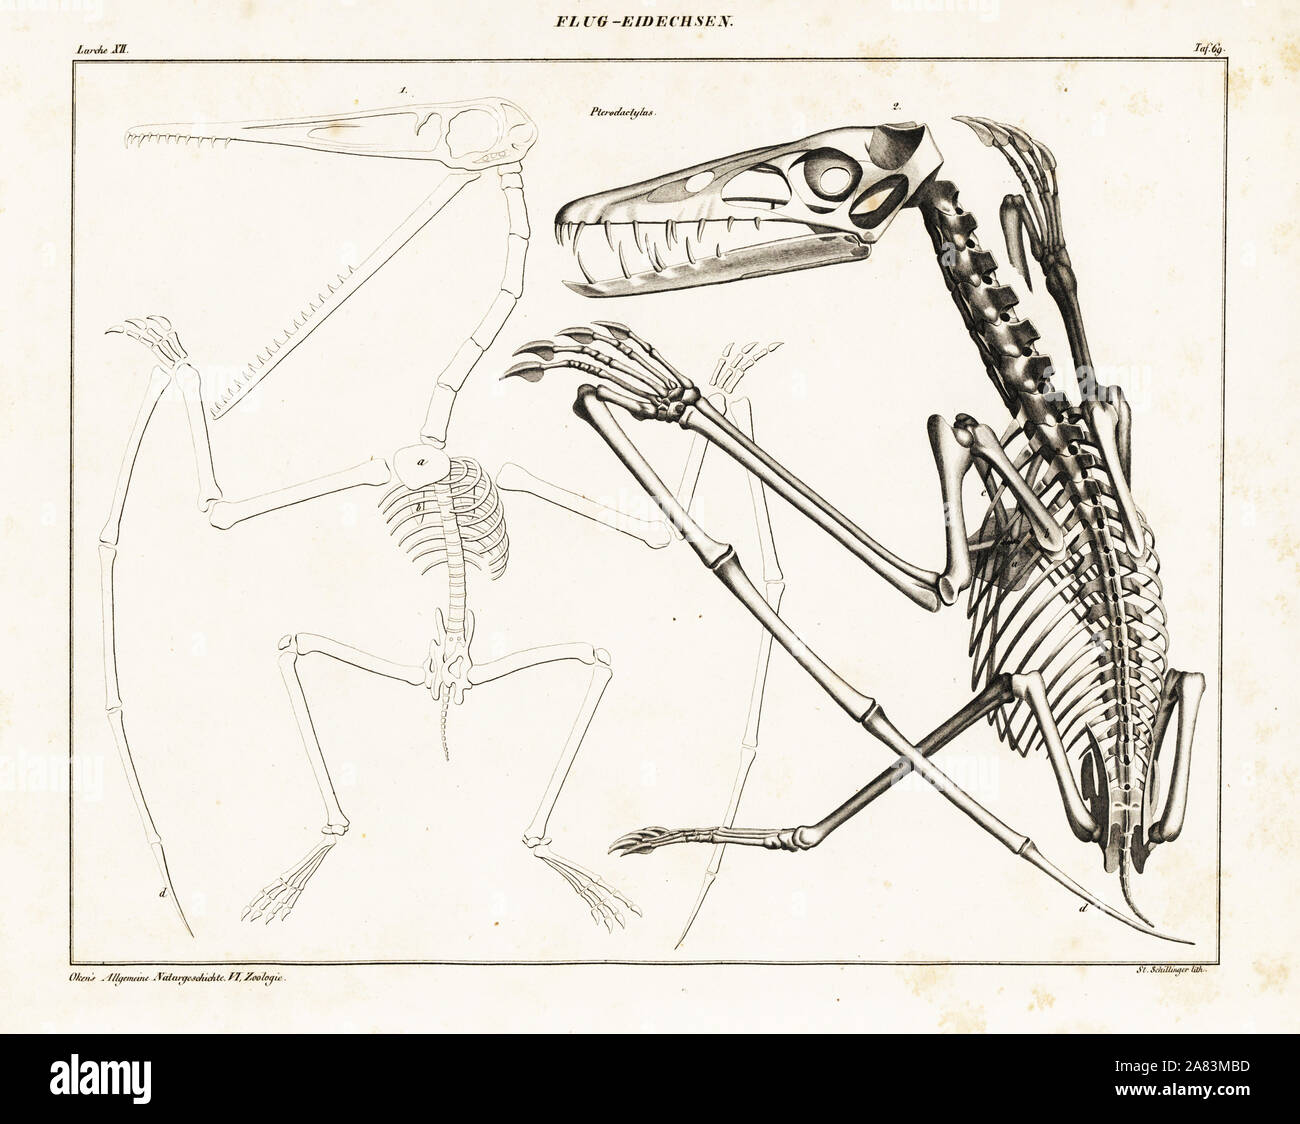 Lo scheletro di un estinto pterodactyl, Pterodactylus. Litografia da San Schilinger da Lorenz Oken universale della storia naturale, Allgemeine Naturgeschichte fur alle Stande, Stuttgart, 1839. Foto Stock